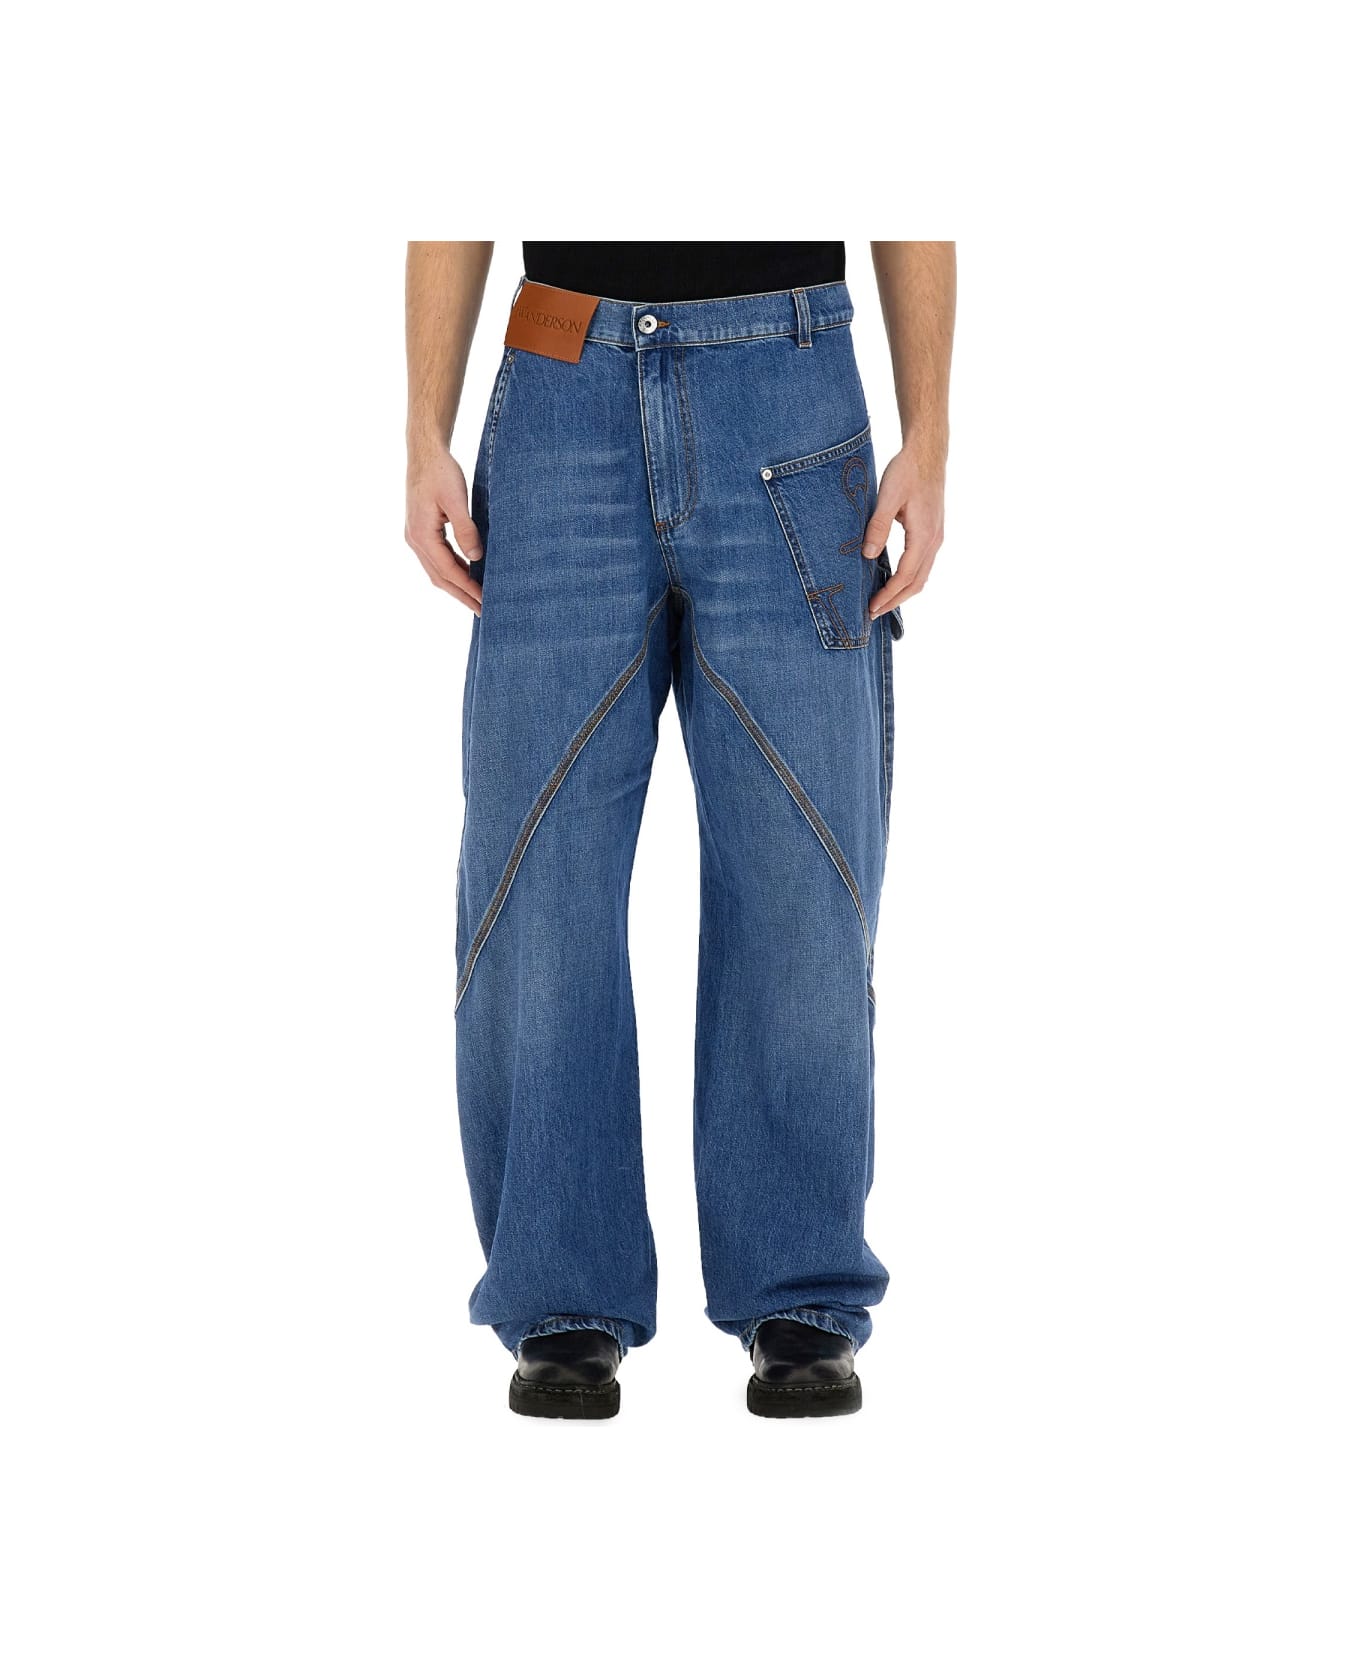 J.W. Anderson Twisted Workwear Denim Jeans - BLUE